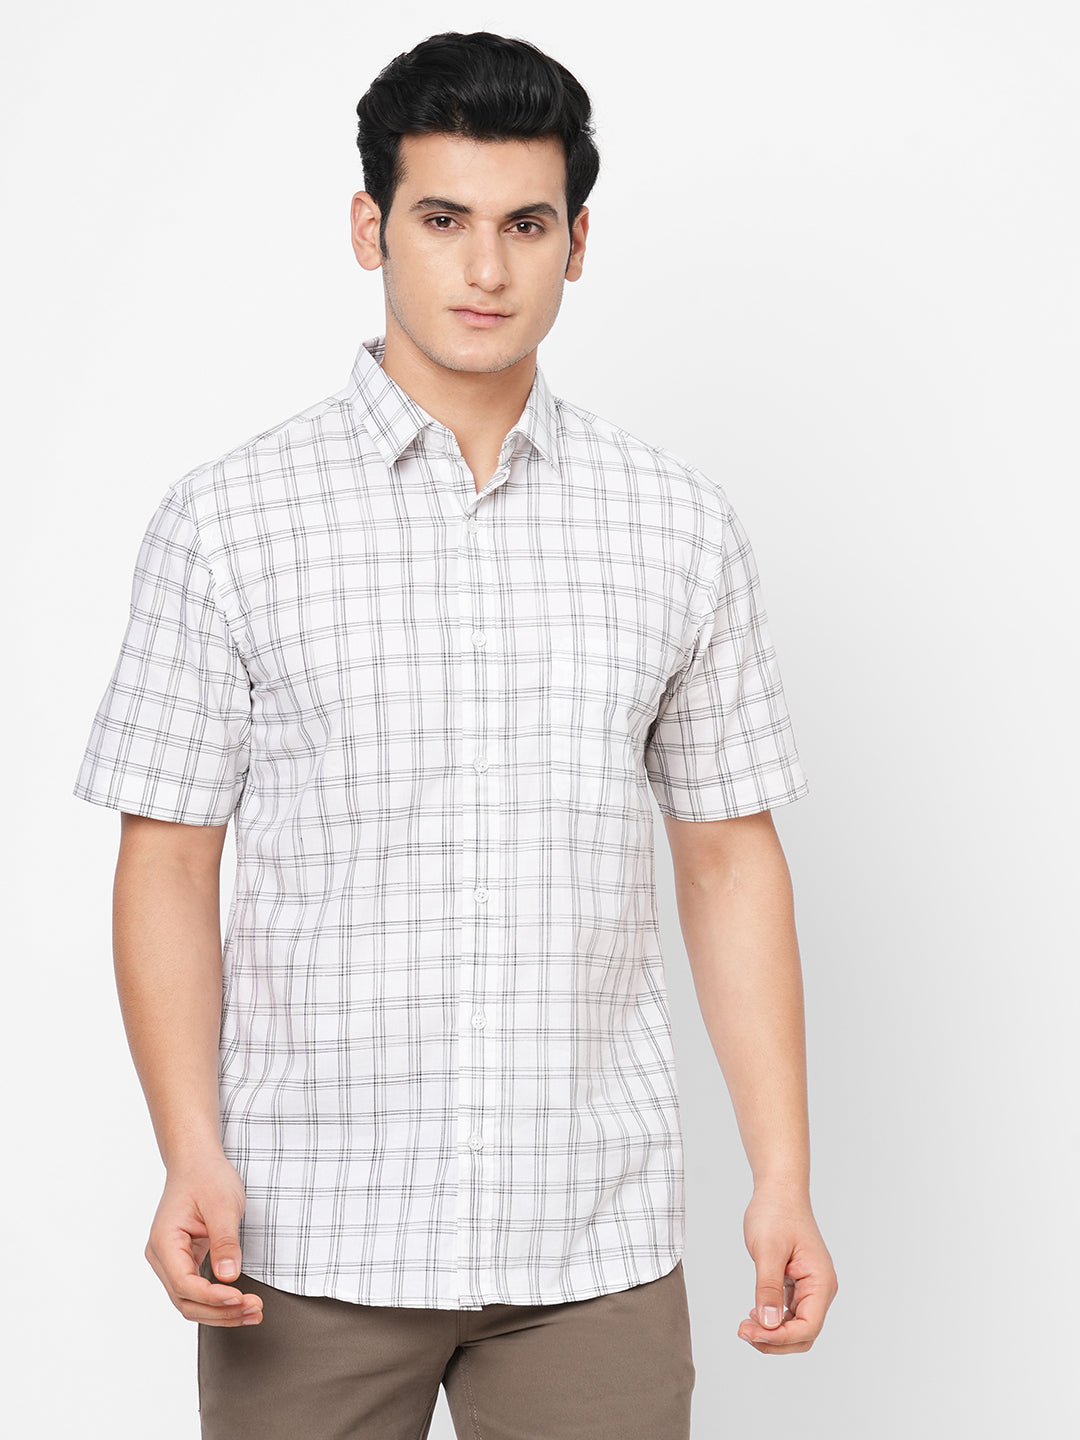 Men's White Cotton Regular Fit Checked Shirt